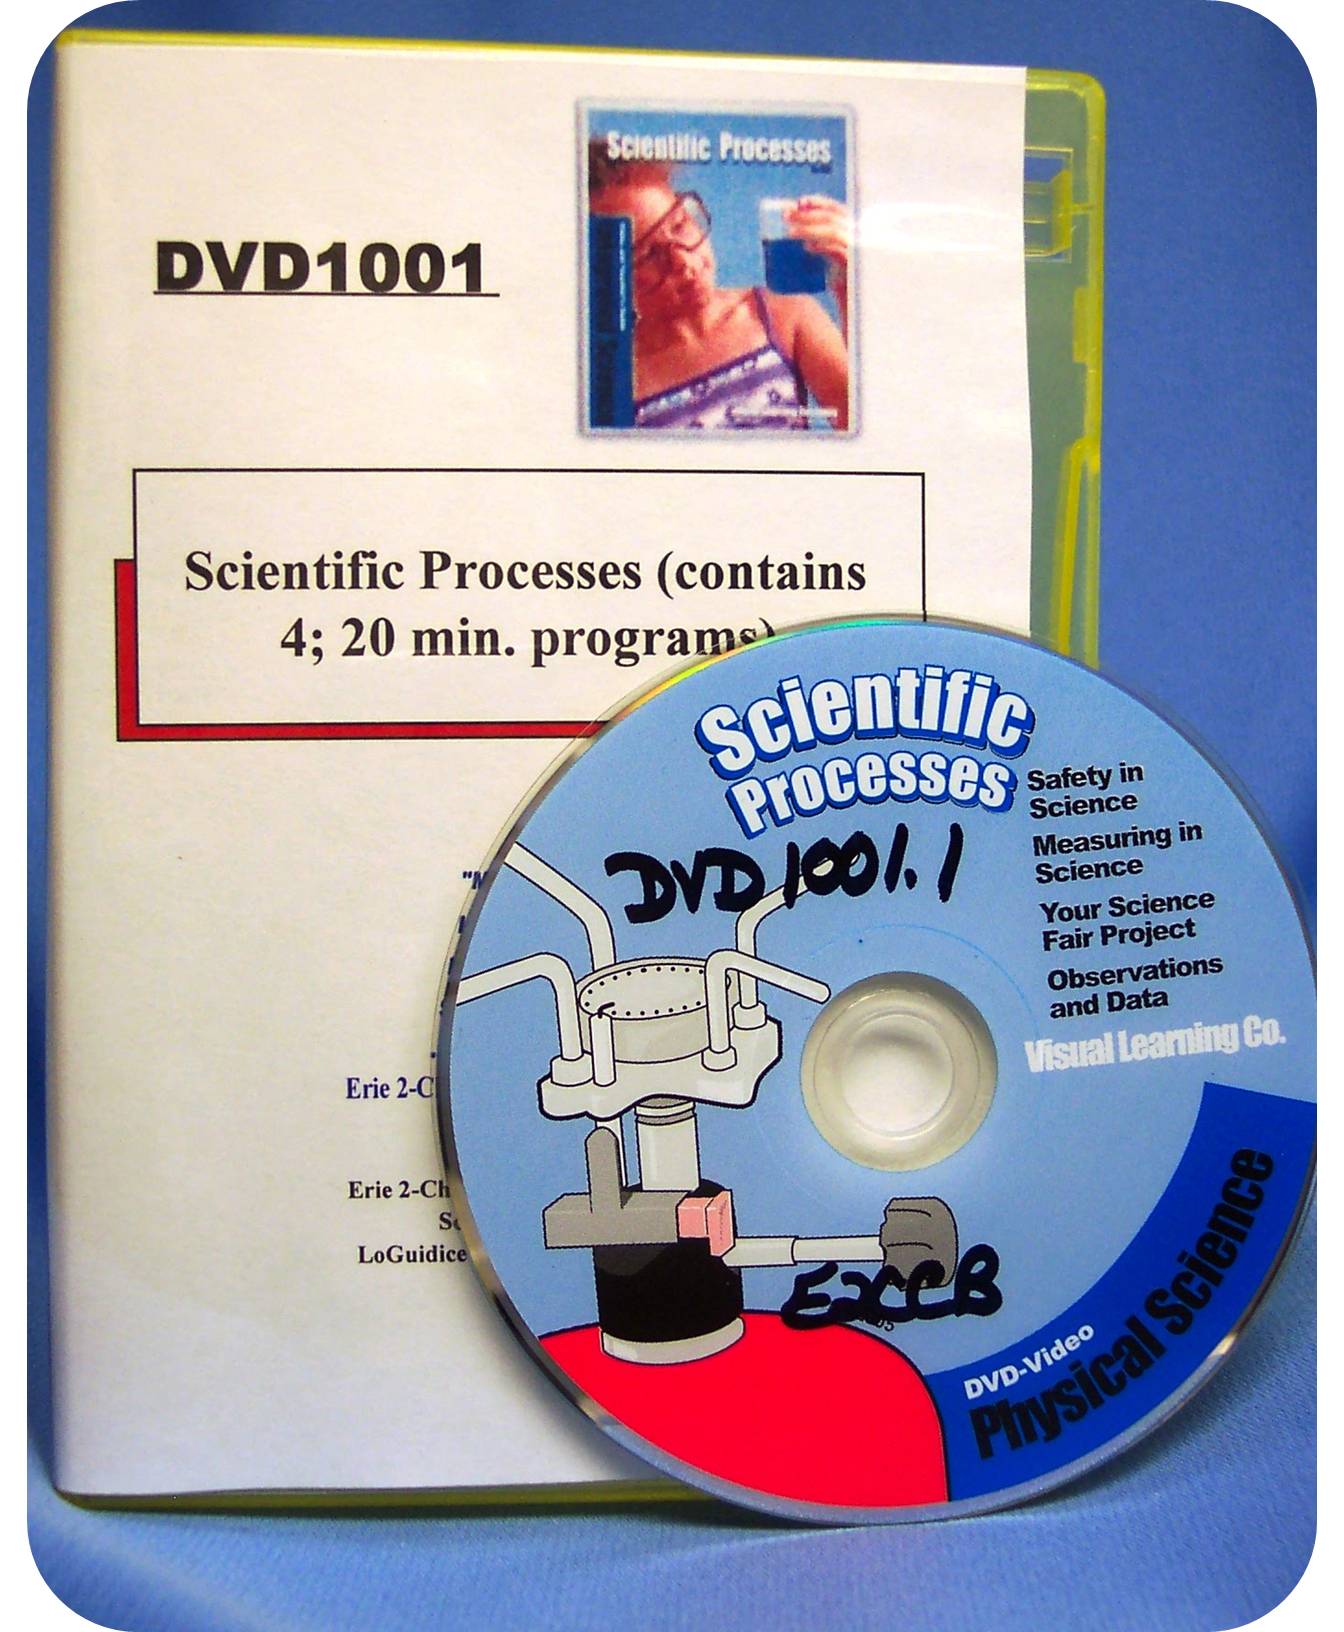 Scientific Processes (contains 4; 20 min. programs)